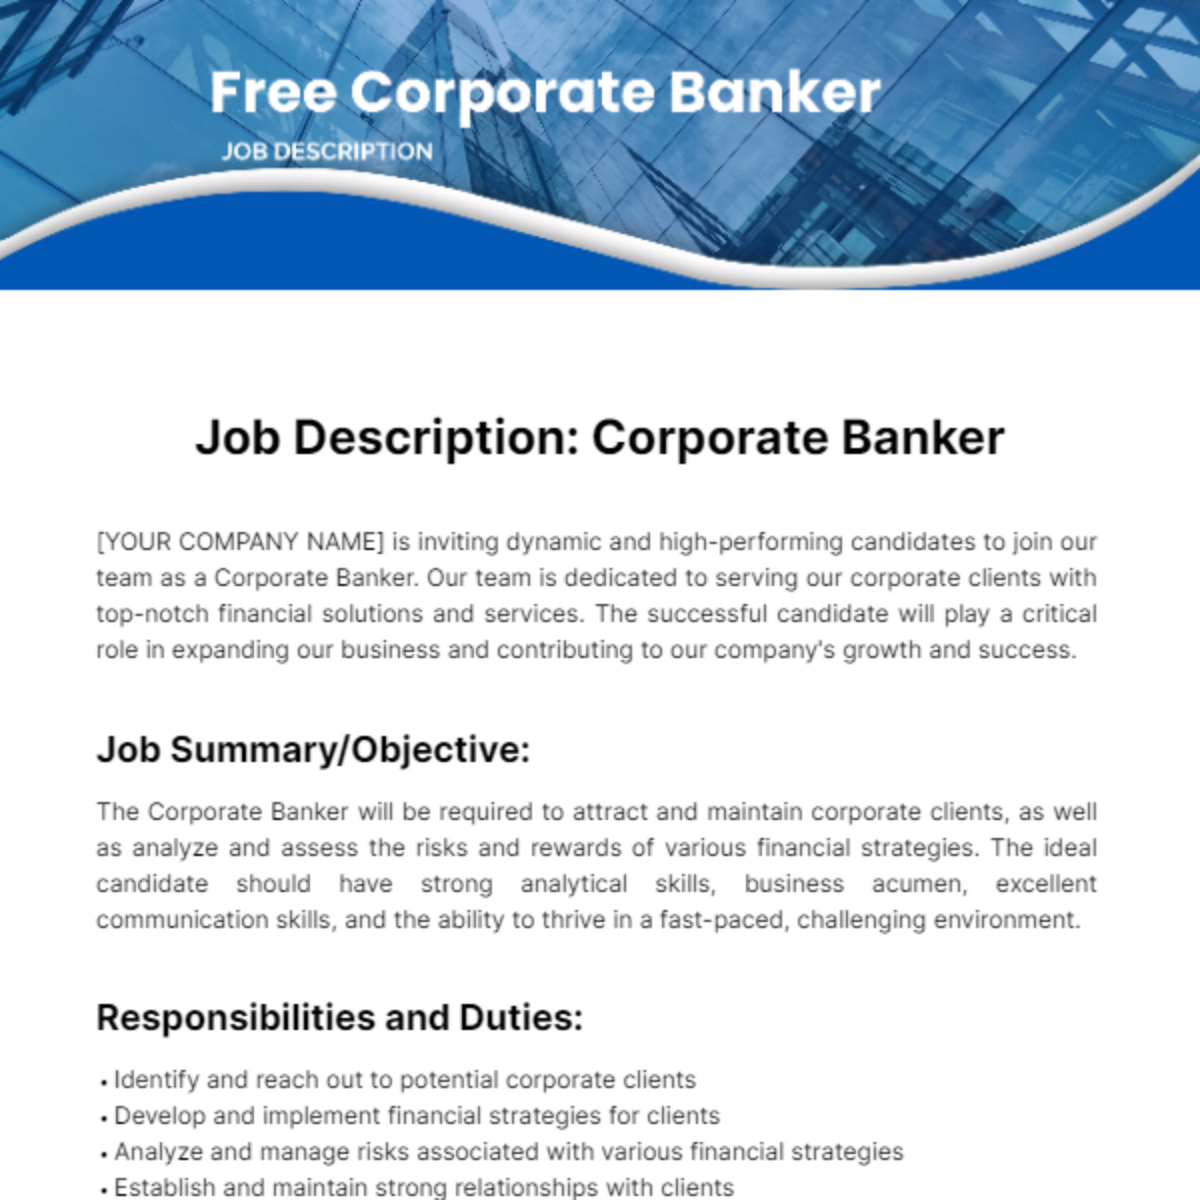 Free Corporate Banker Job Description Template